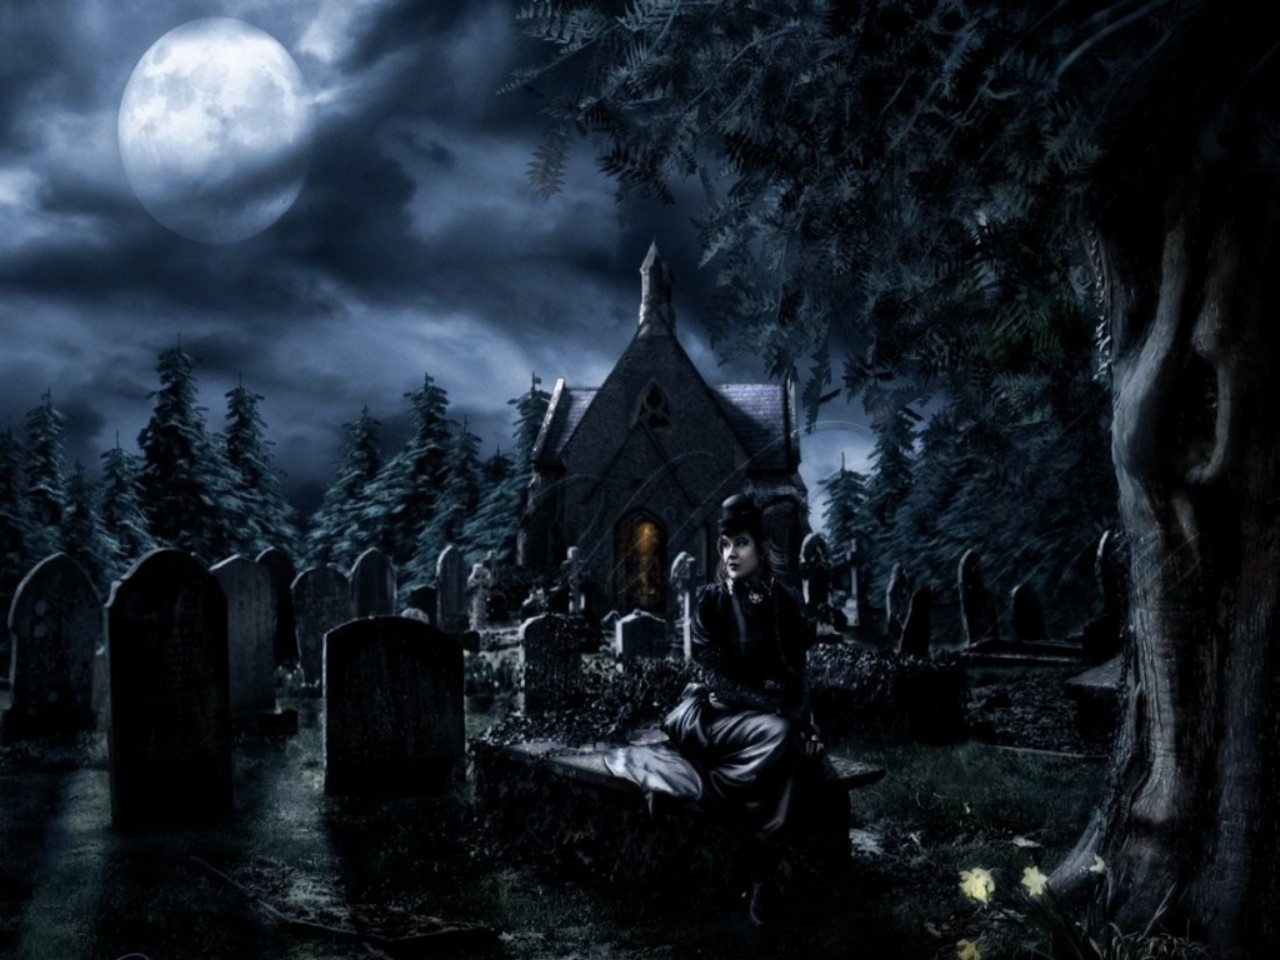 artistic, dark, cemetery, gothic, moon, night